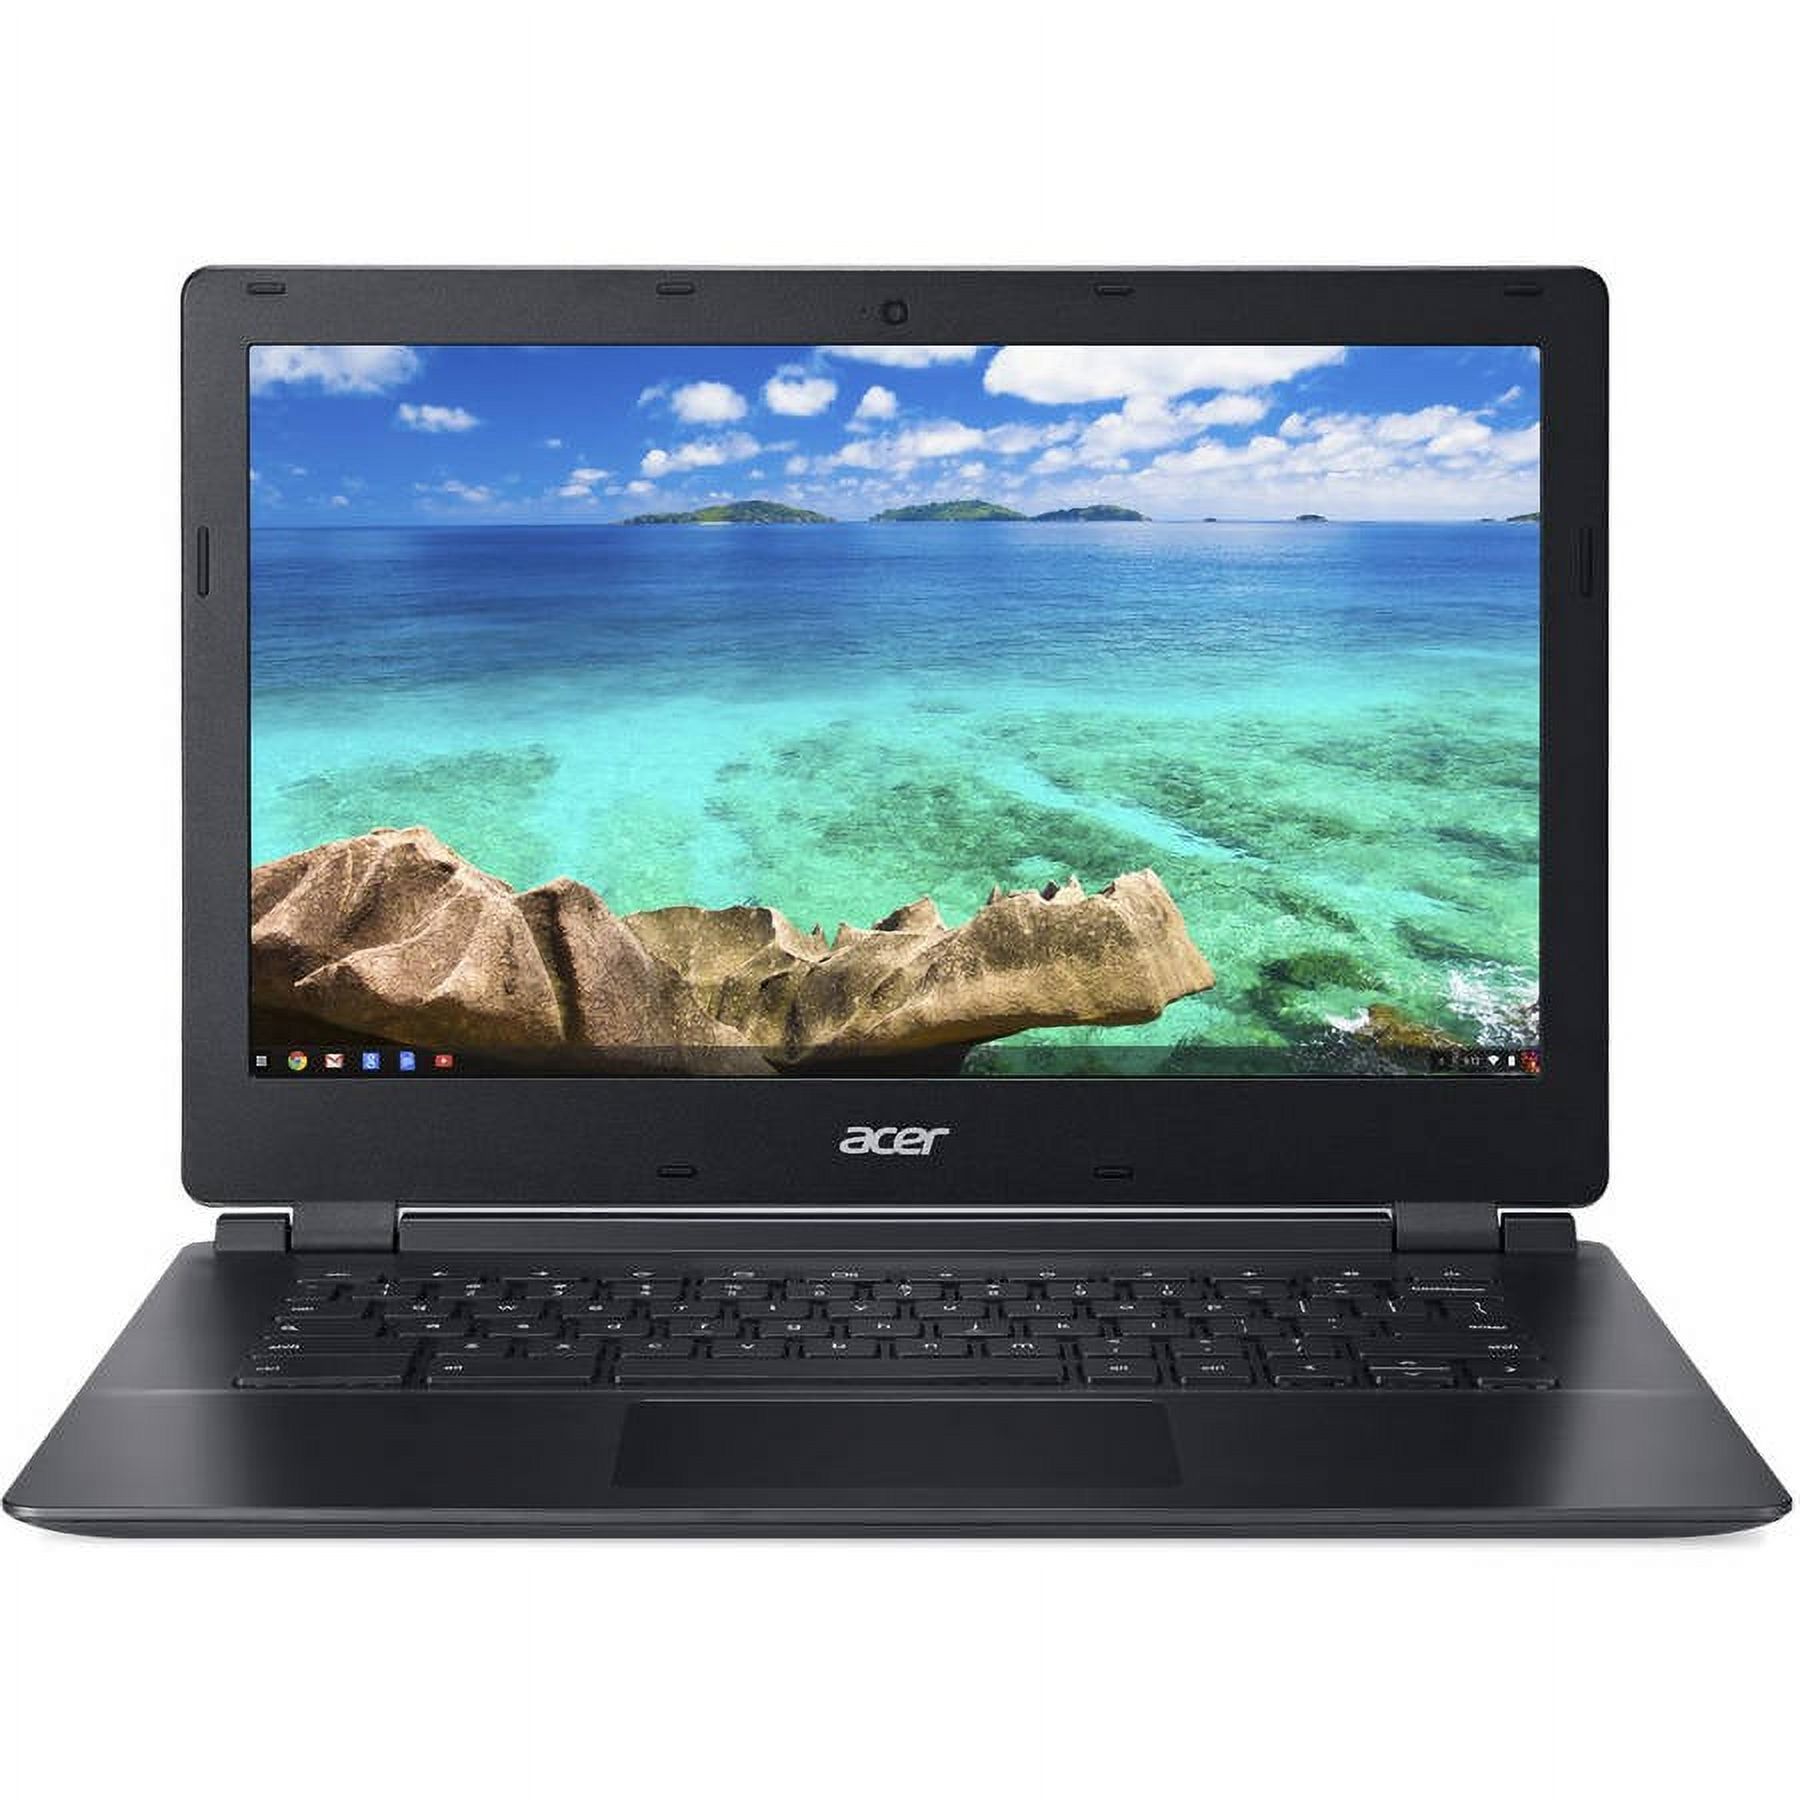 Acer Chromebook 13 C810-T7ZT - 13.3" - Tegra K1 CD570M-A1 - 4 GB RAM - 16 GB SSD - image 1 of 4